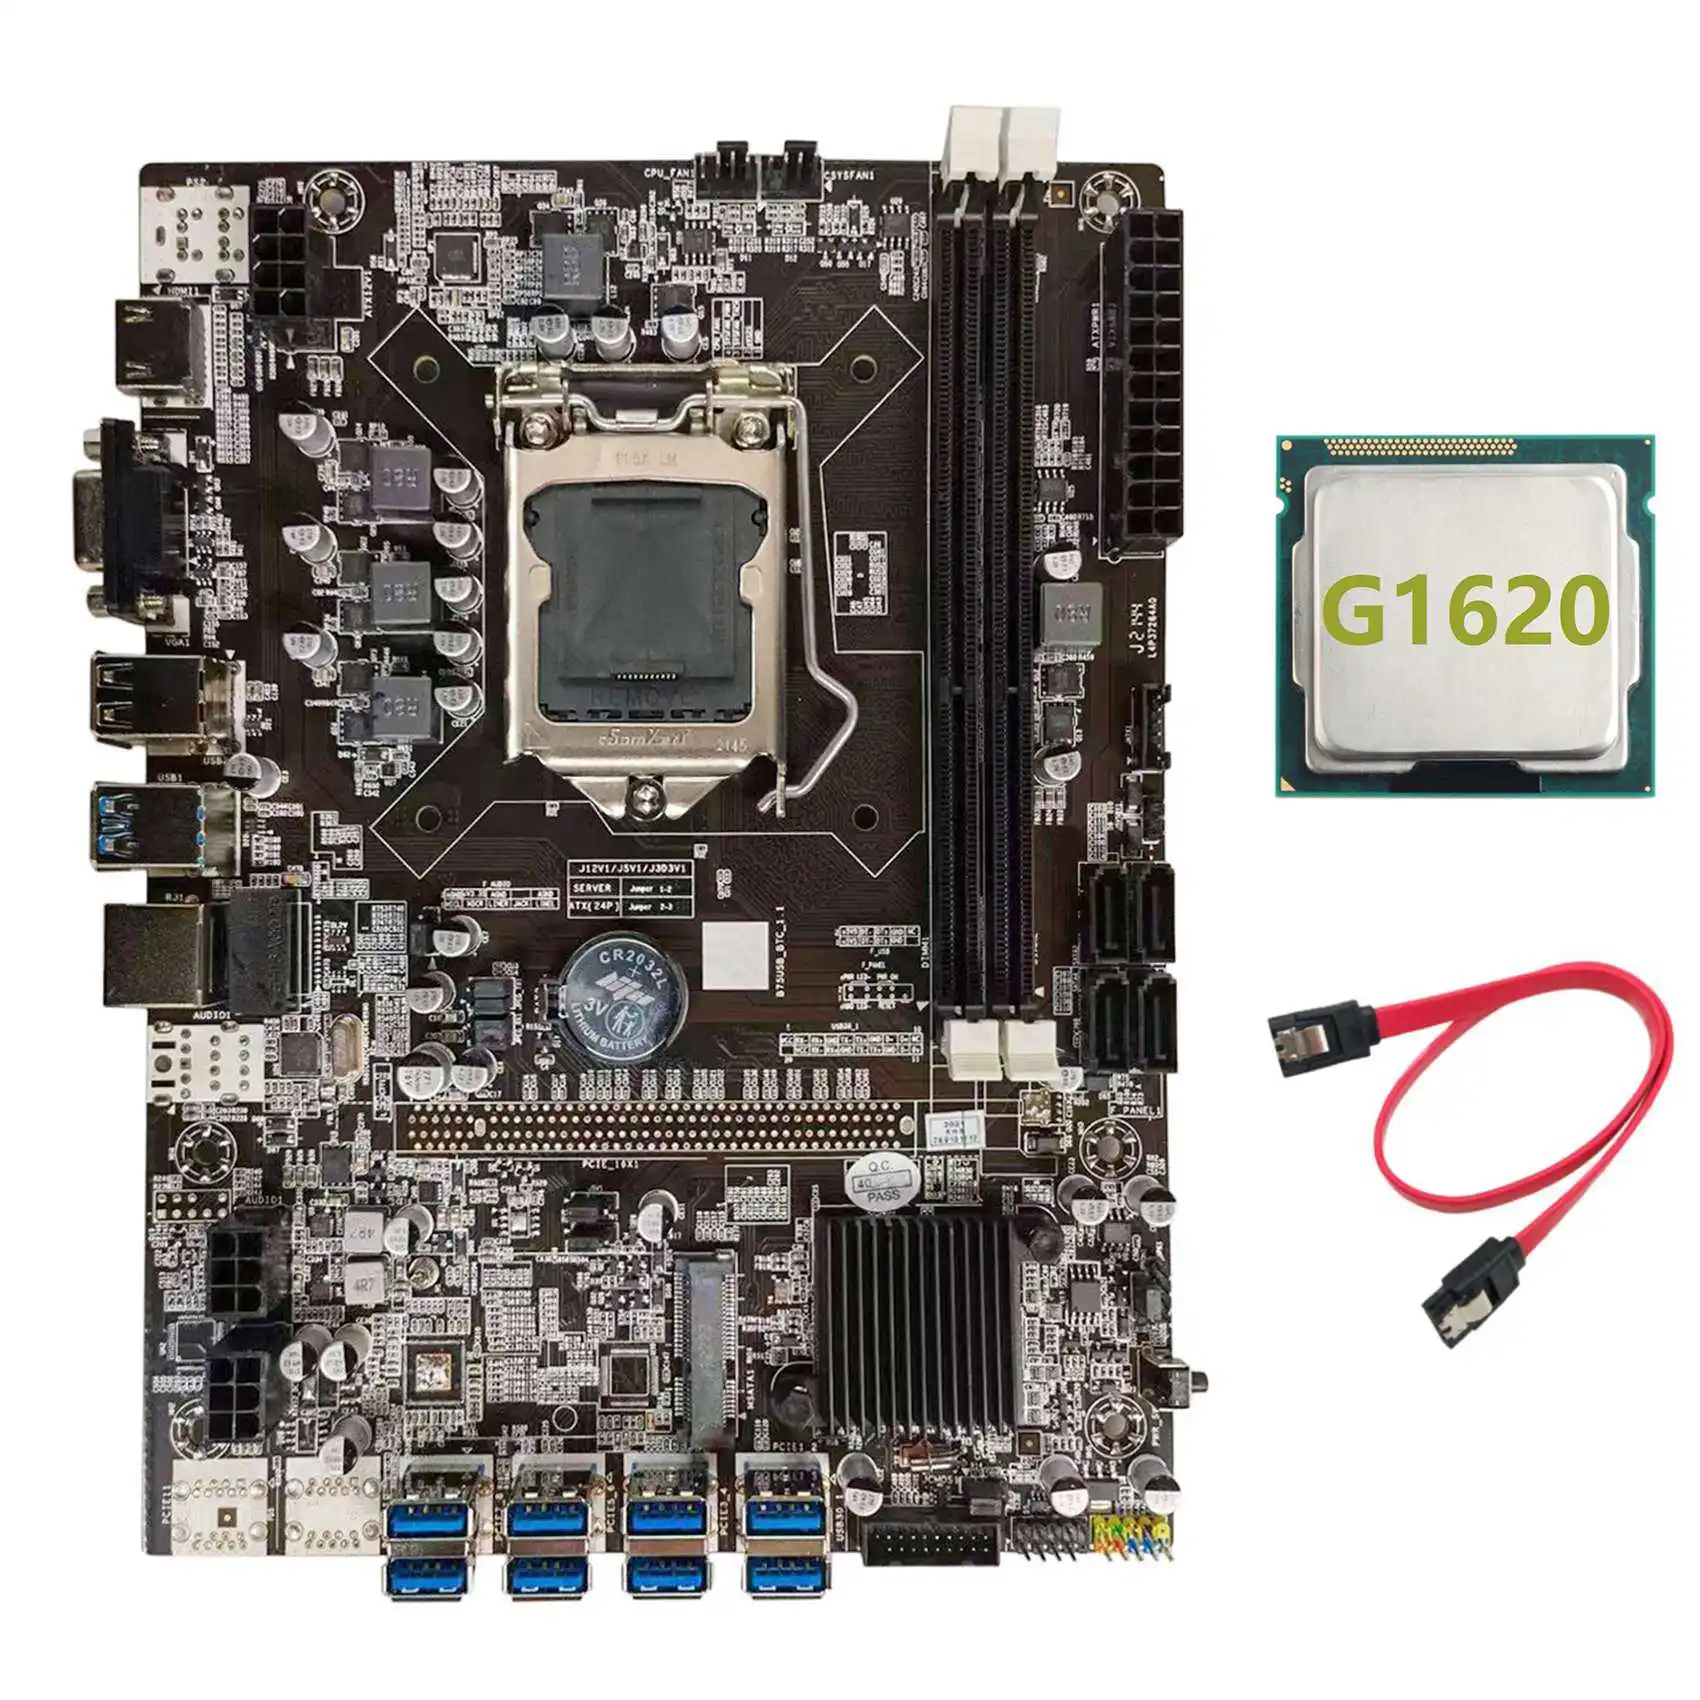 

Материнская плата B75 для майнинга BTC + процессор G1620 + кабель SATA LGA1155 8xpcie USB адаптер DDR3 MSATA B75 USB Майнер материнская плата